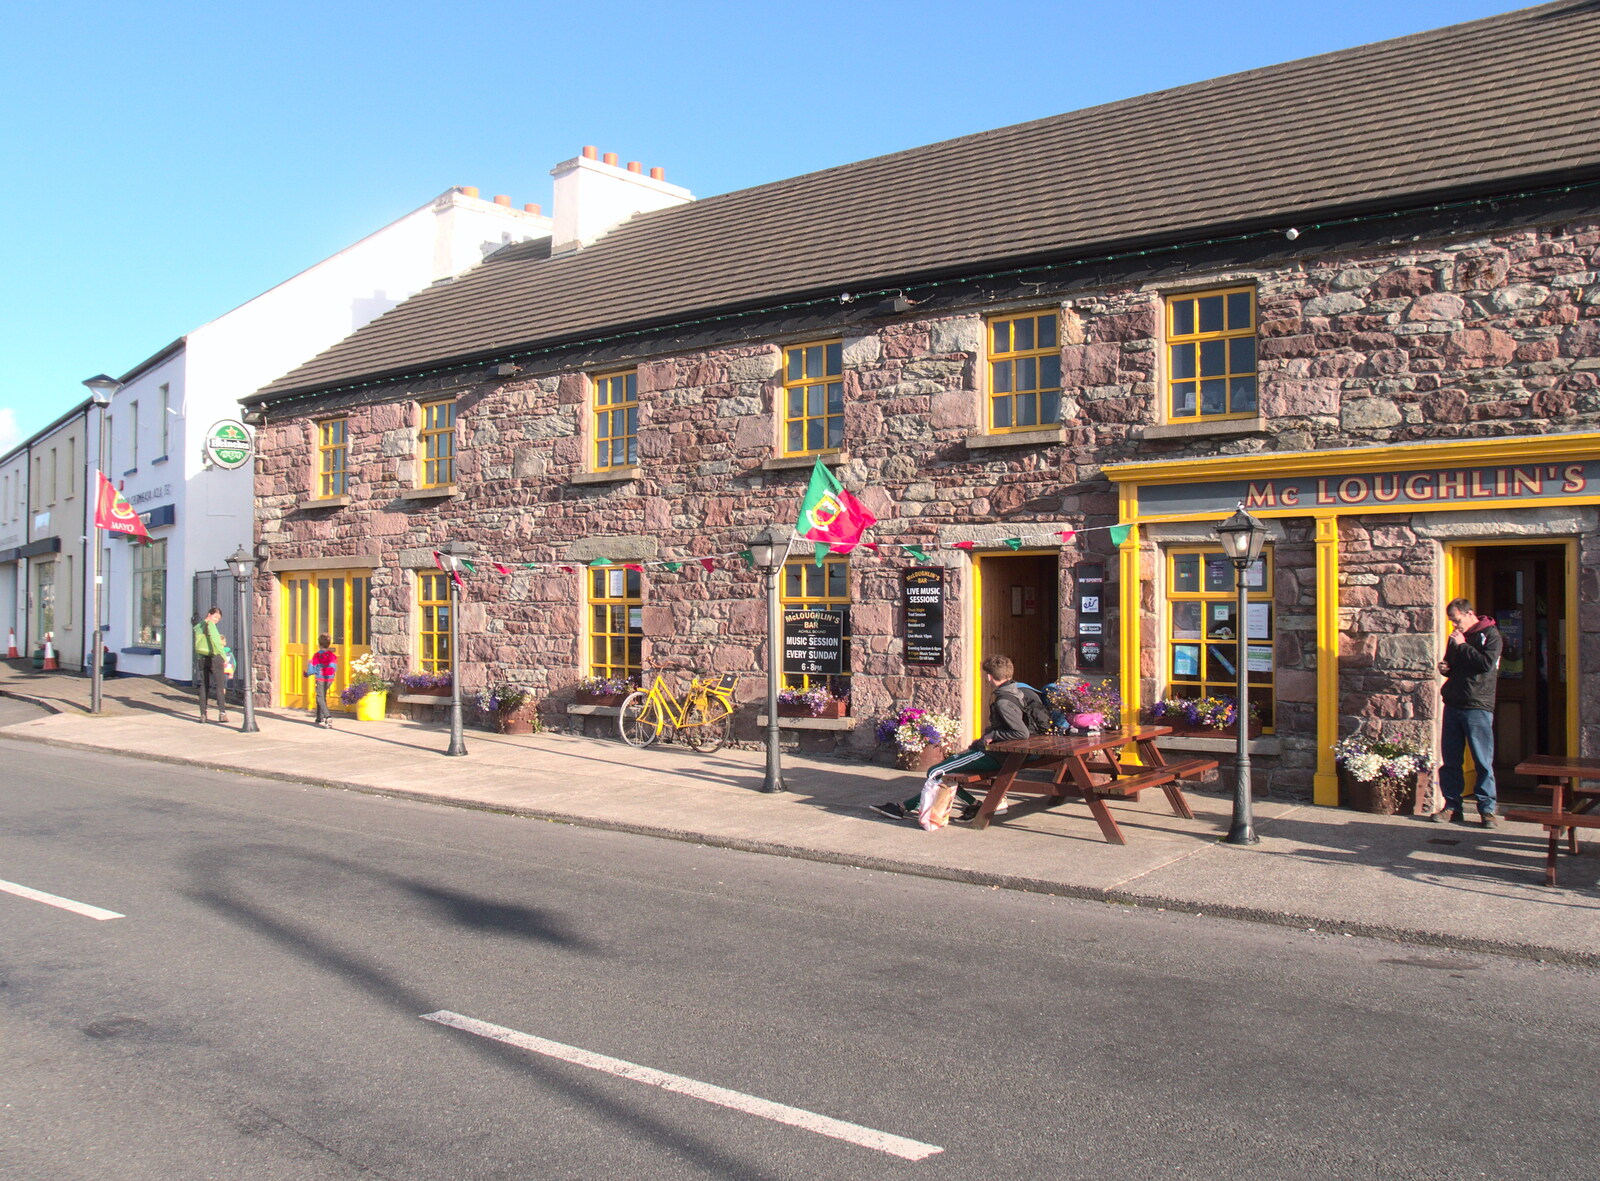 McLoughlin's bar in Achill from Surfing Achill Island, Oileán Acla, Maigh Eo, Ireland - 8th August 2017